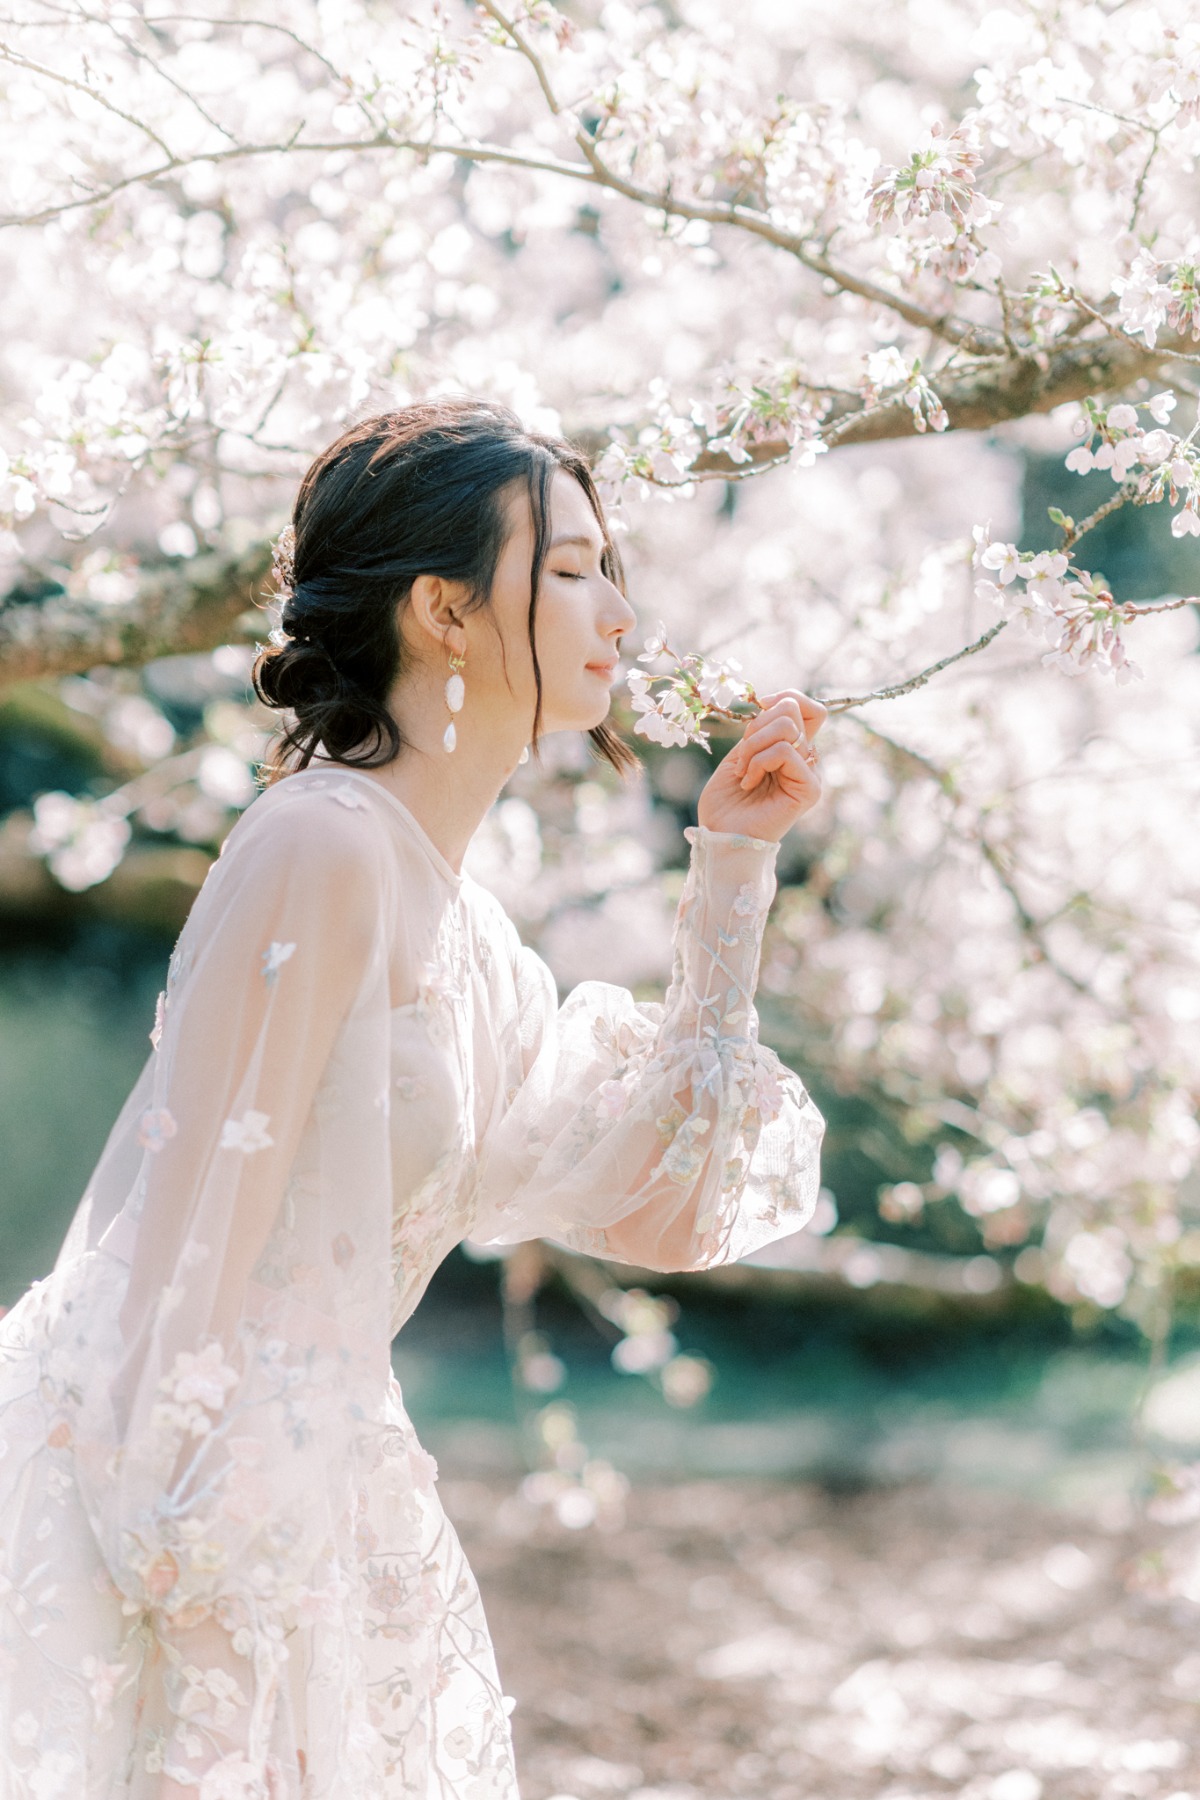 Um...This Cherry Blossom Elopement Shoot Has Us Speechless